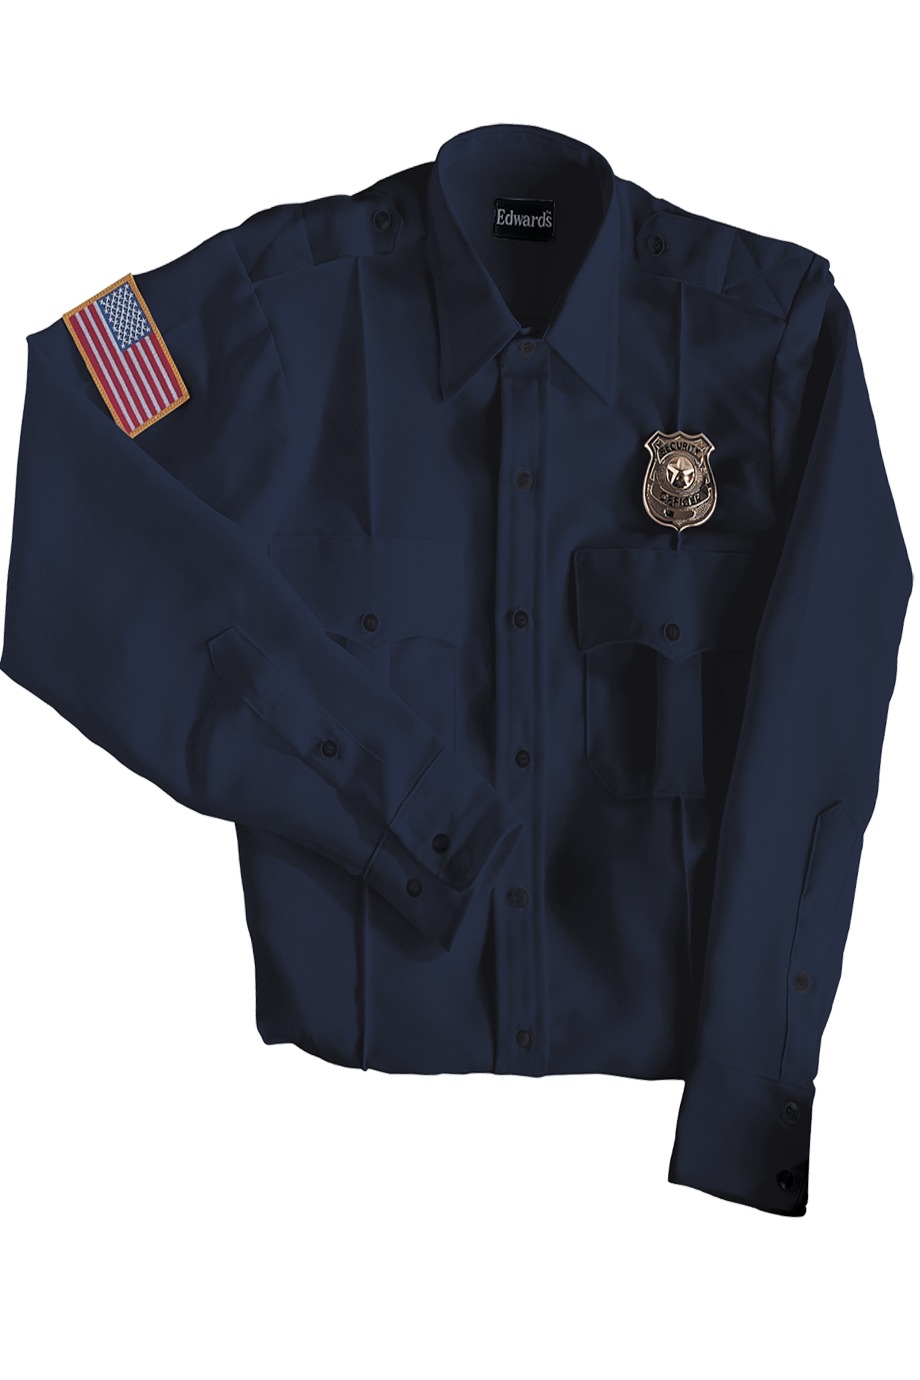 Edwards Garment 1275 - Security Long Sleeve Shirt